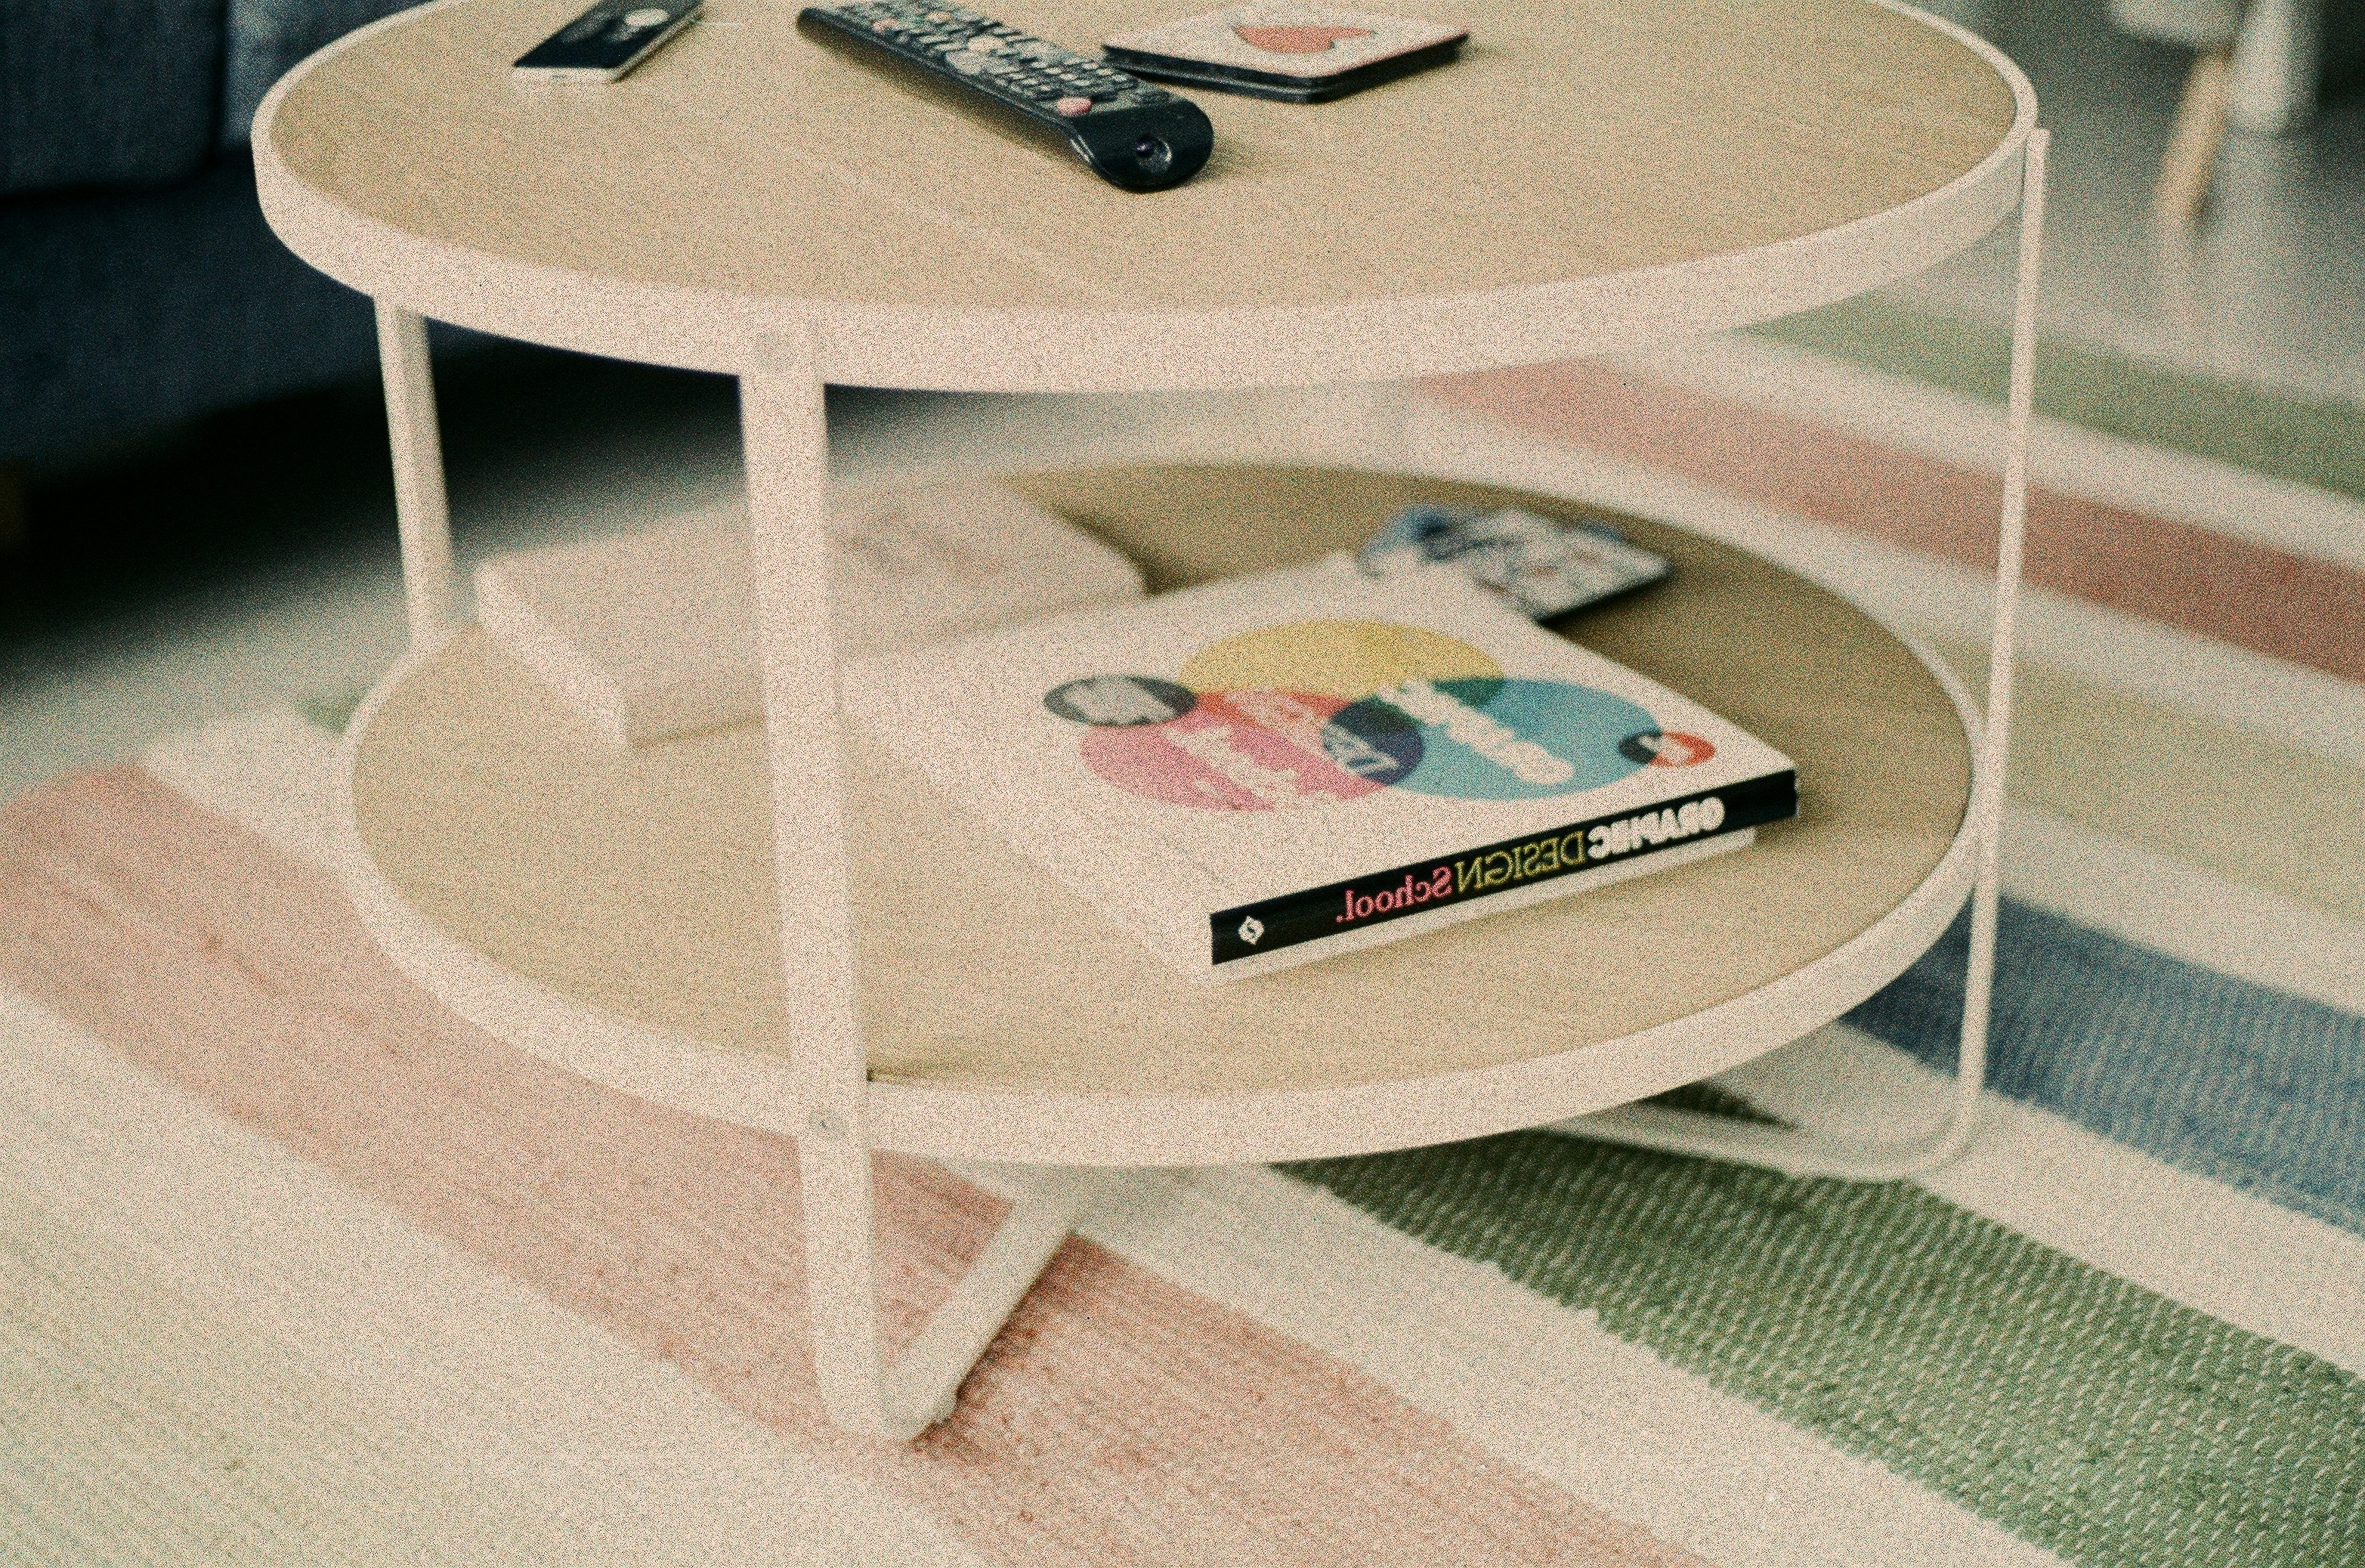 black remote control on white round table